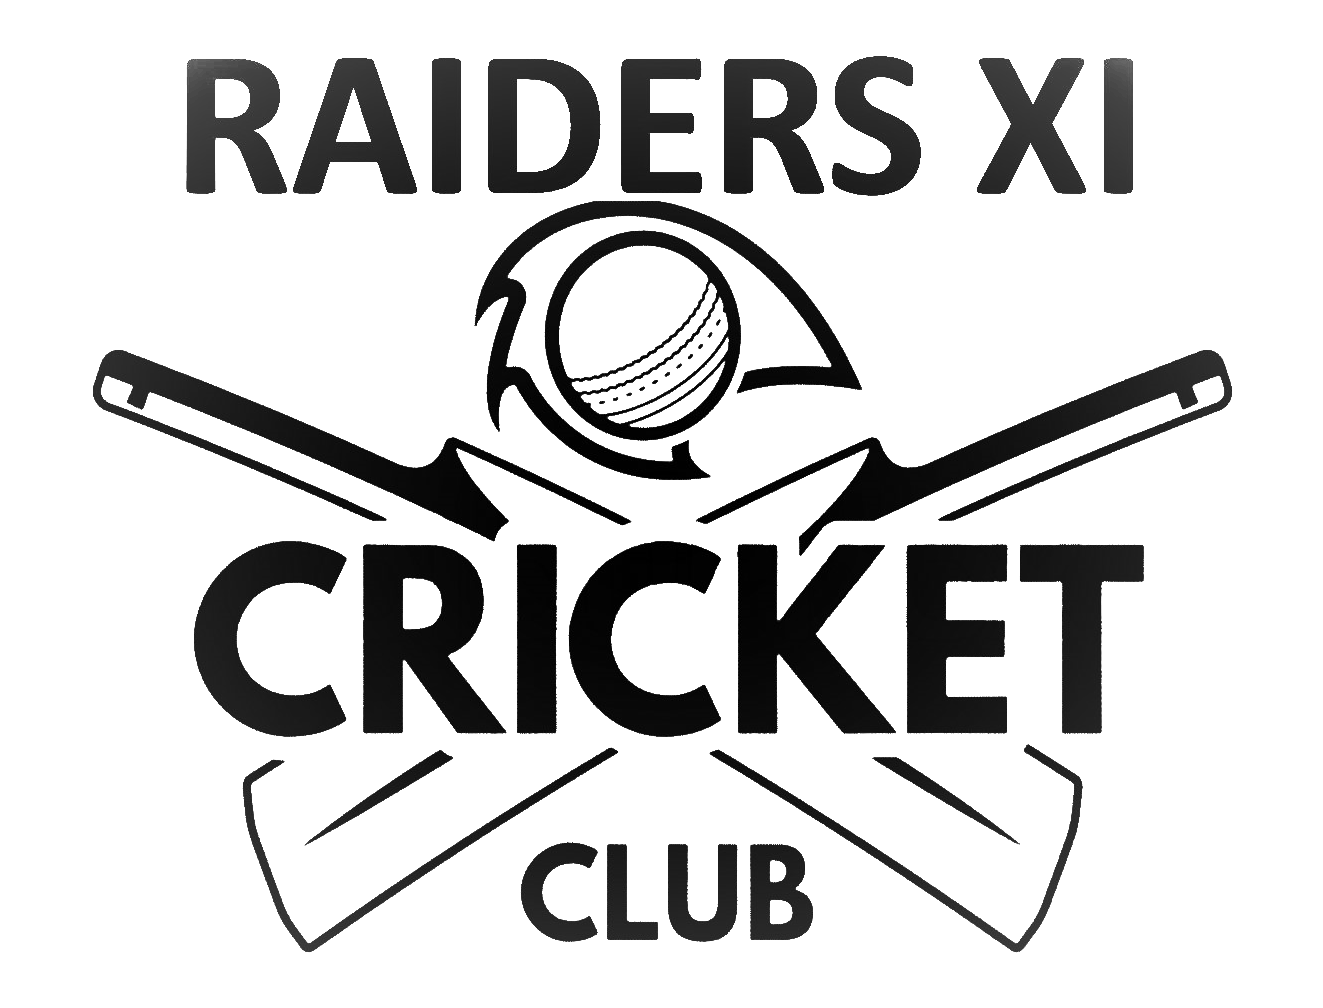 raiders x? cricket club png logo #5046